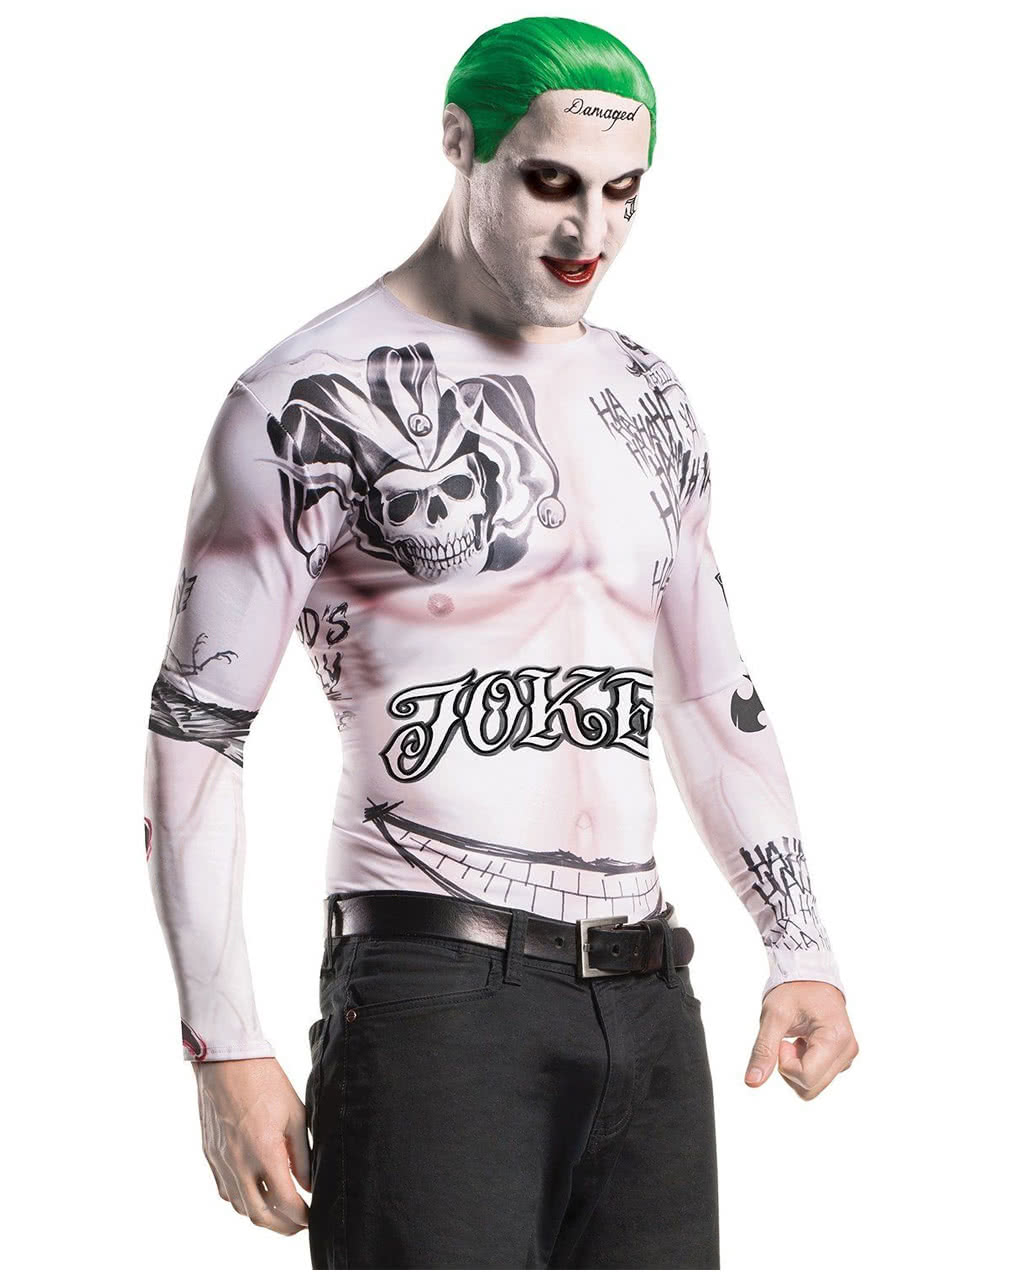 Joker Suicide Squad Costume